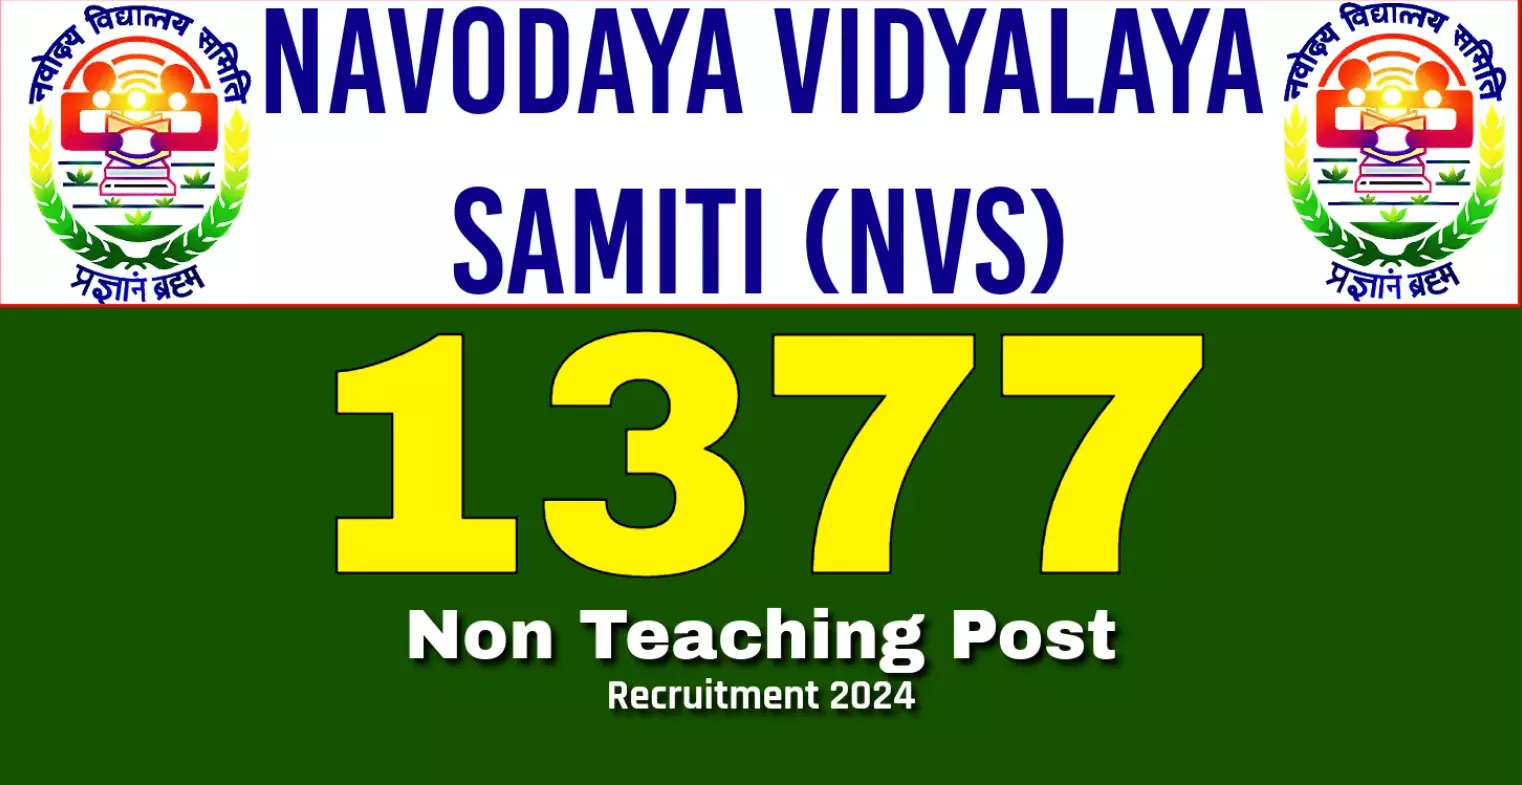 Navodaya Vidyalaya Samiti releases recruitment for 1377 posts